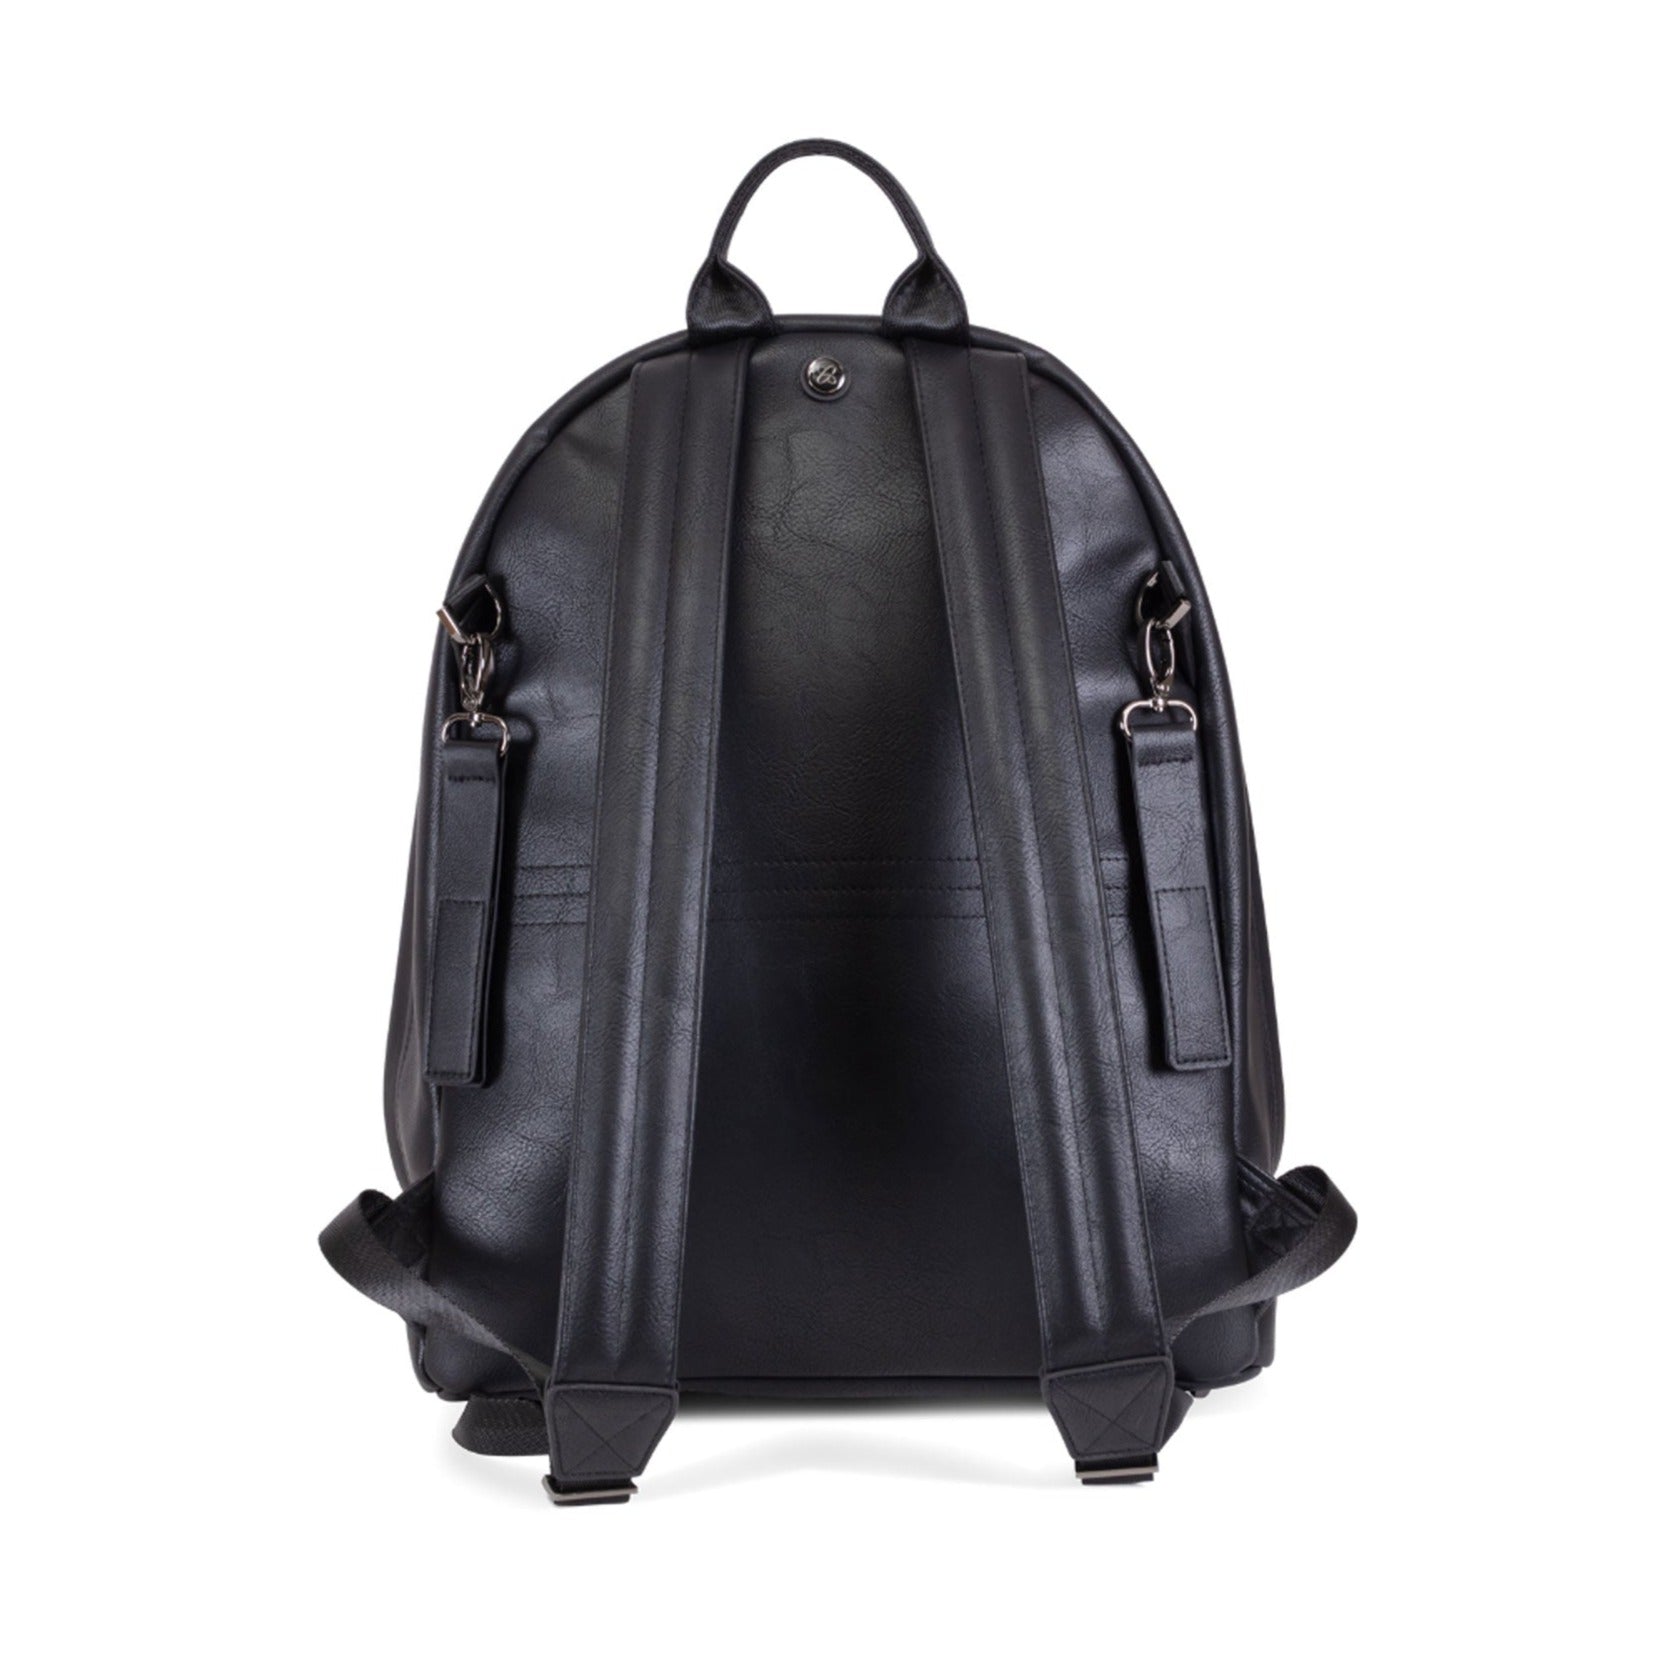 Silver Cross Rucksack Changing Bag for Dune / Reef Stroller - Black